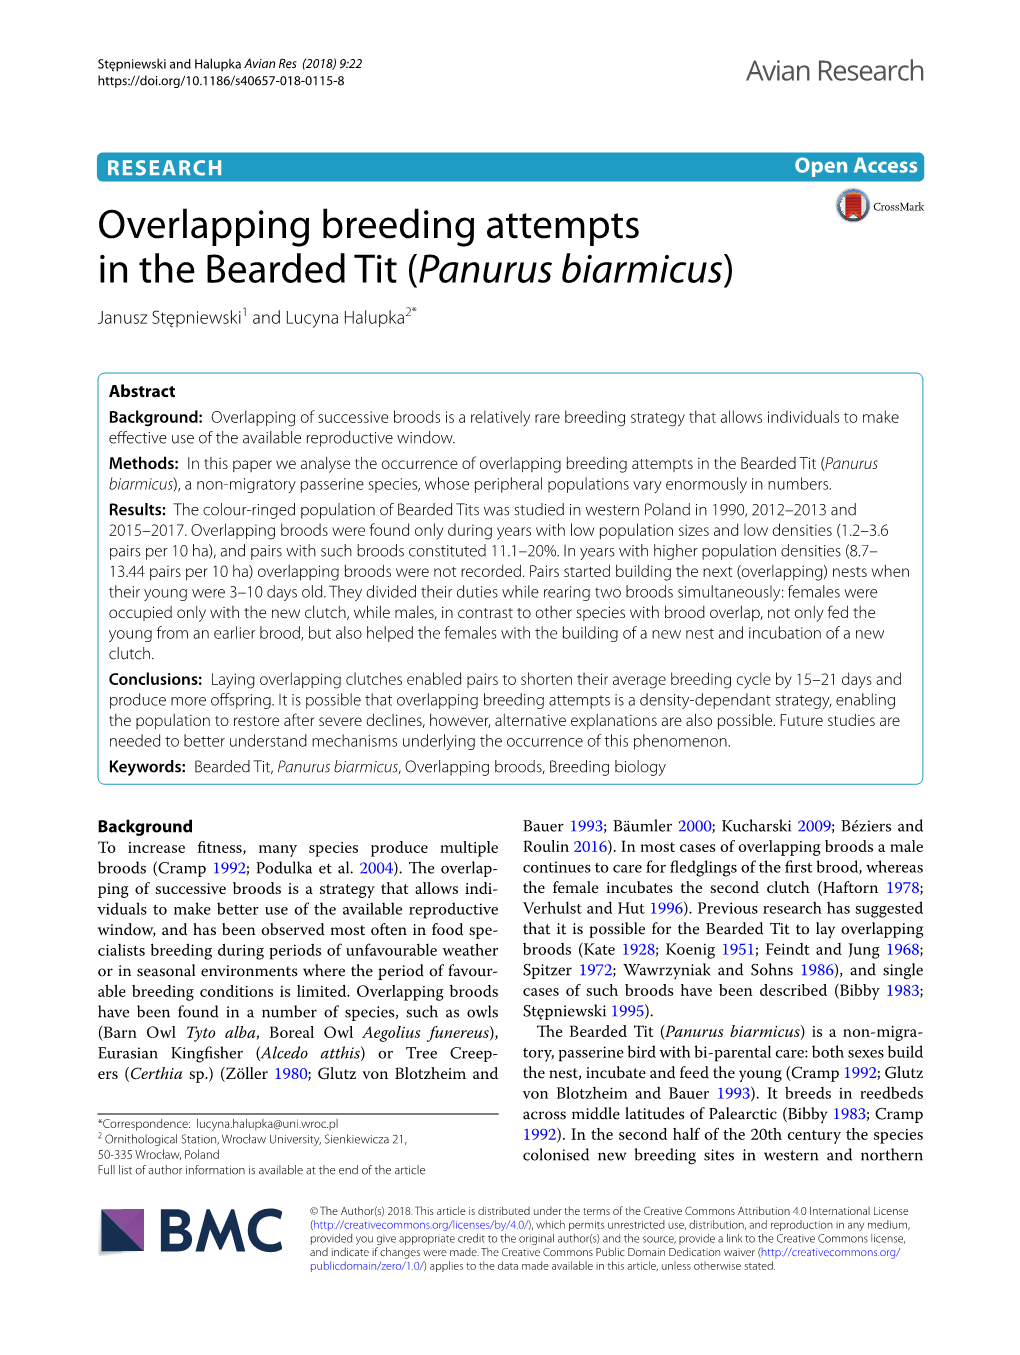 Overlapping Breeding Attempts in the Bearded Tit (Panurus Biarmicus) Janusz Stępniewski1 and Lucyna Halupka2*